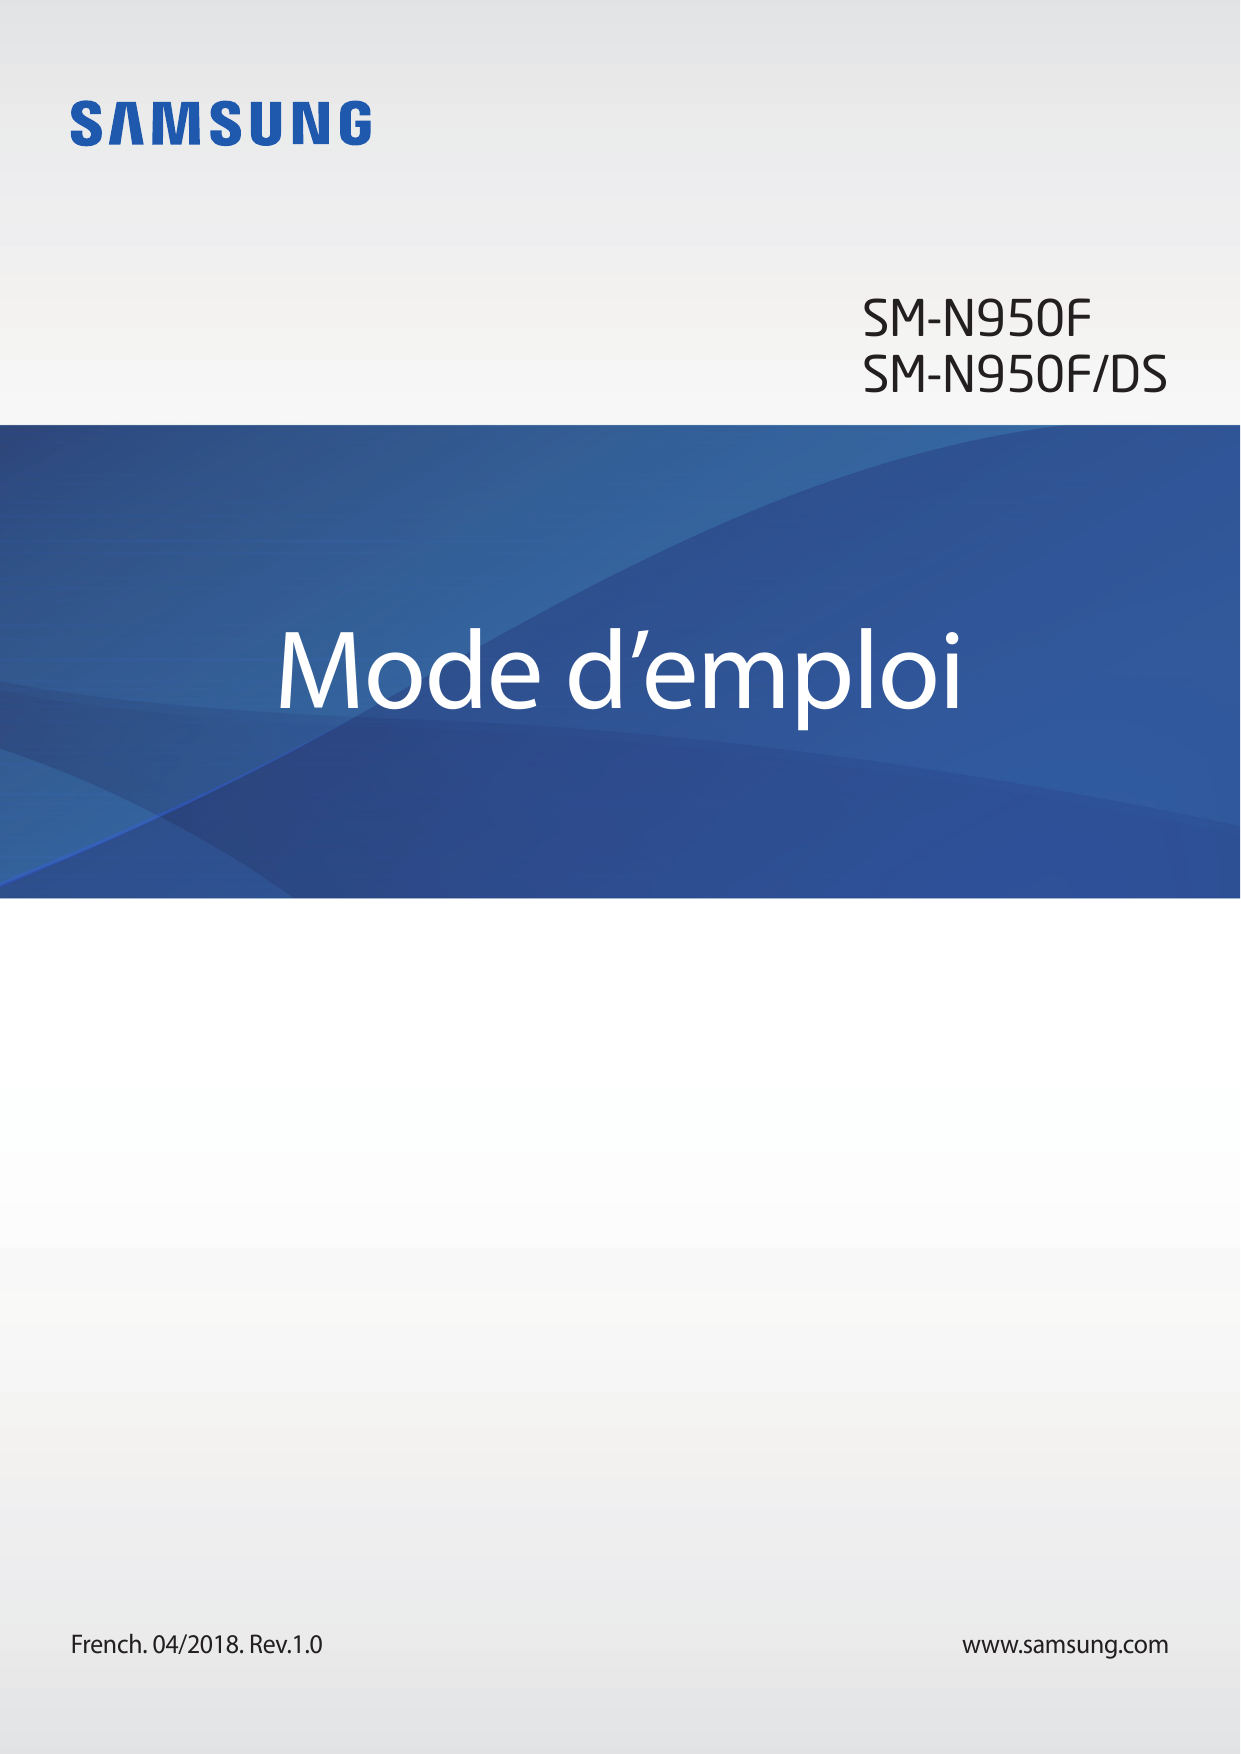 SM-N950FSM-N950F/DSMode d’emploiFrench. 04/2018. Rev.1.0www.samsung.com